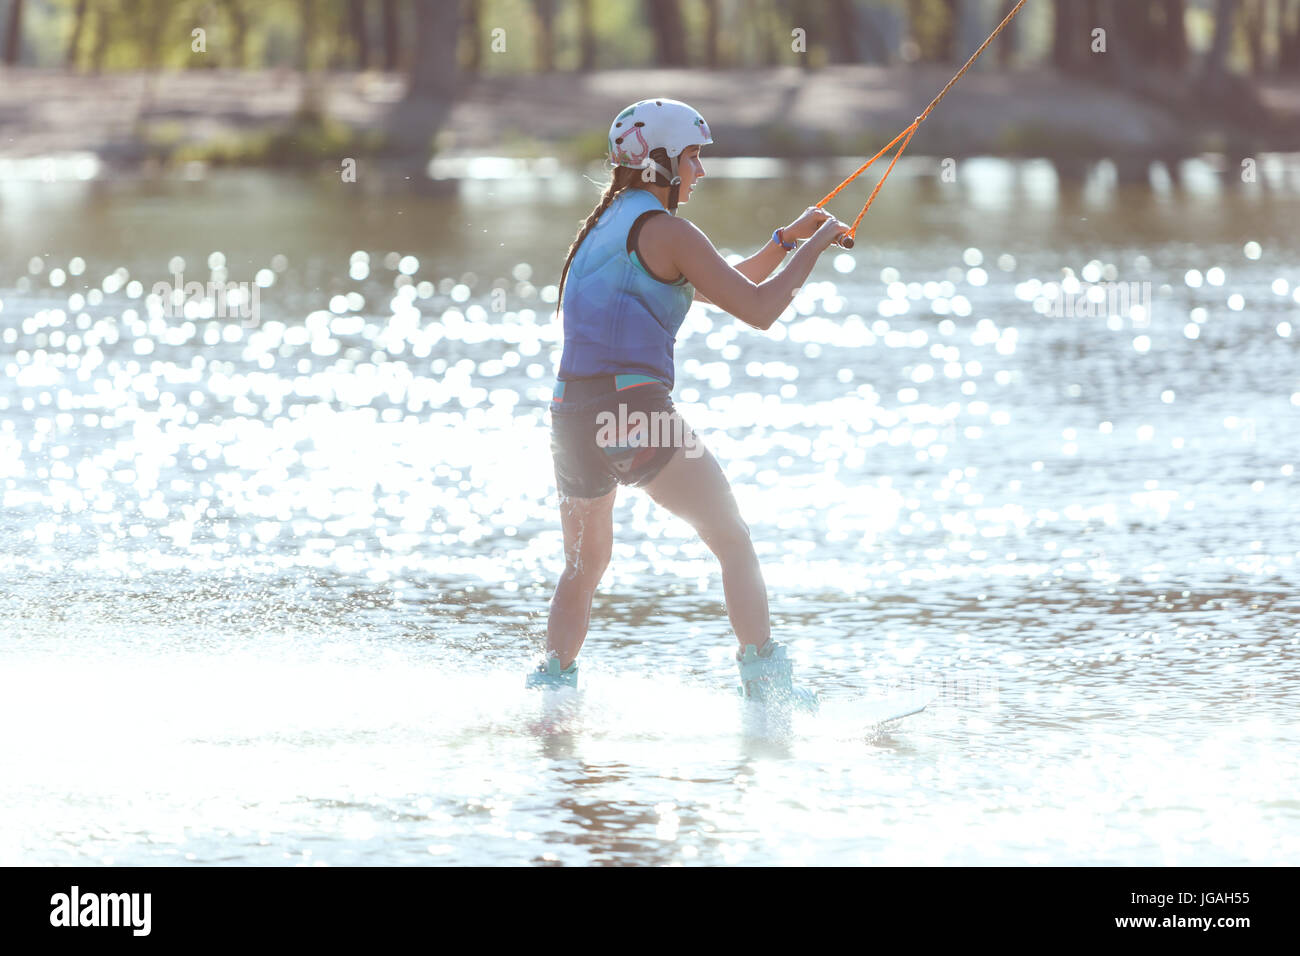 Woman skiing on water, summer fun and sports. Stock Photo